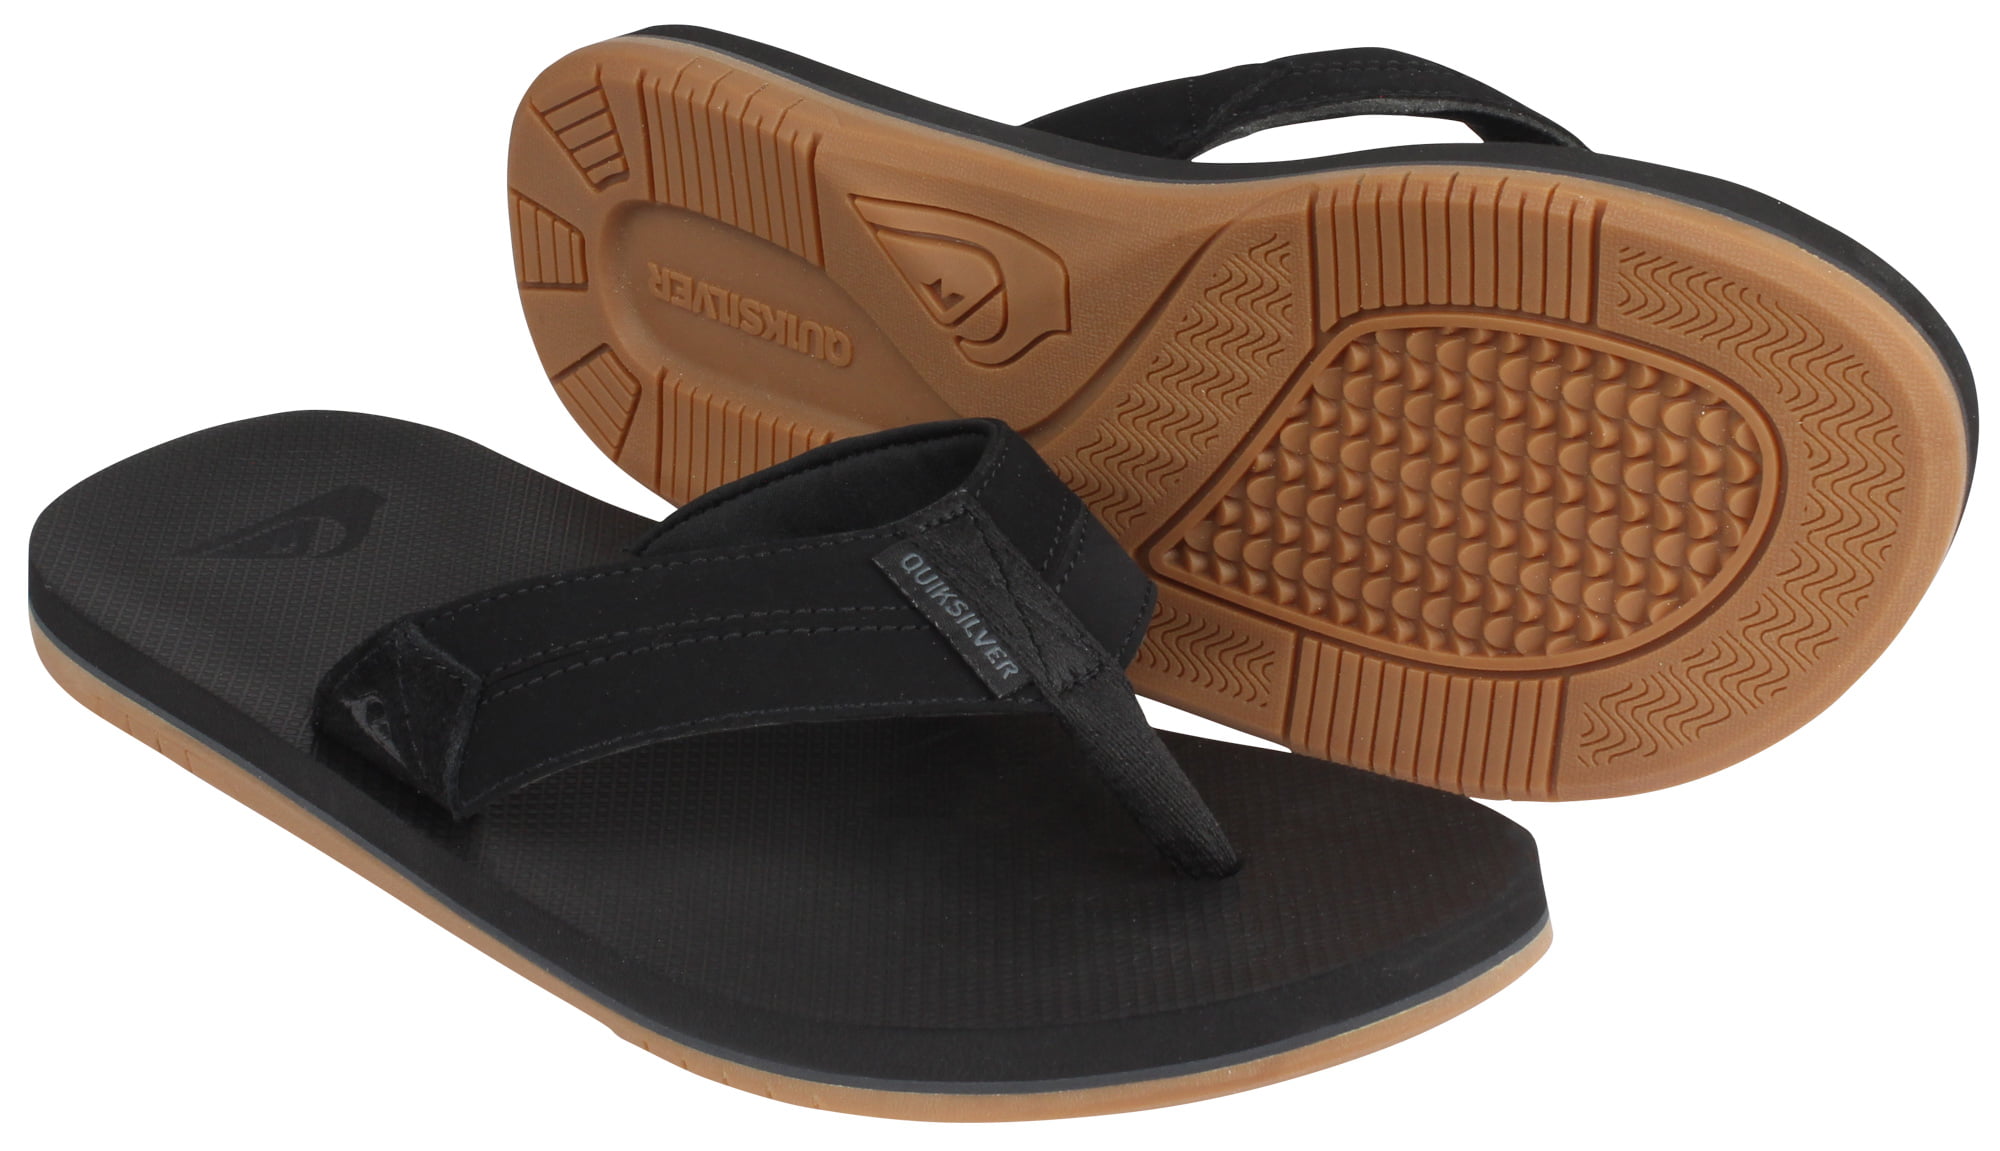 Quiksilver Mens Coastal Oasis II Sandals - Black/Brown - 7